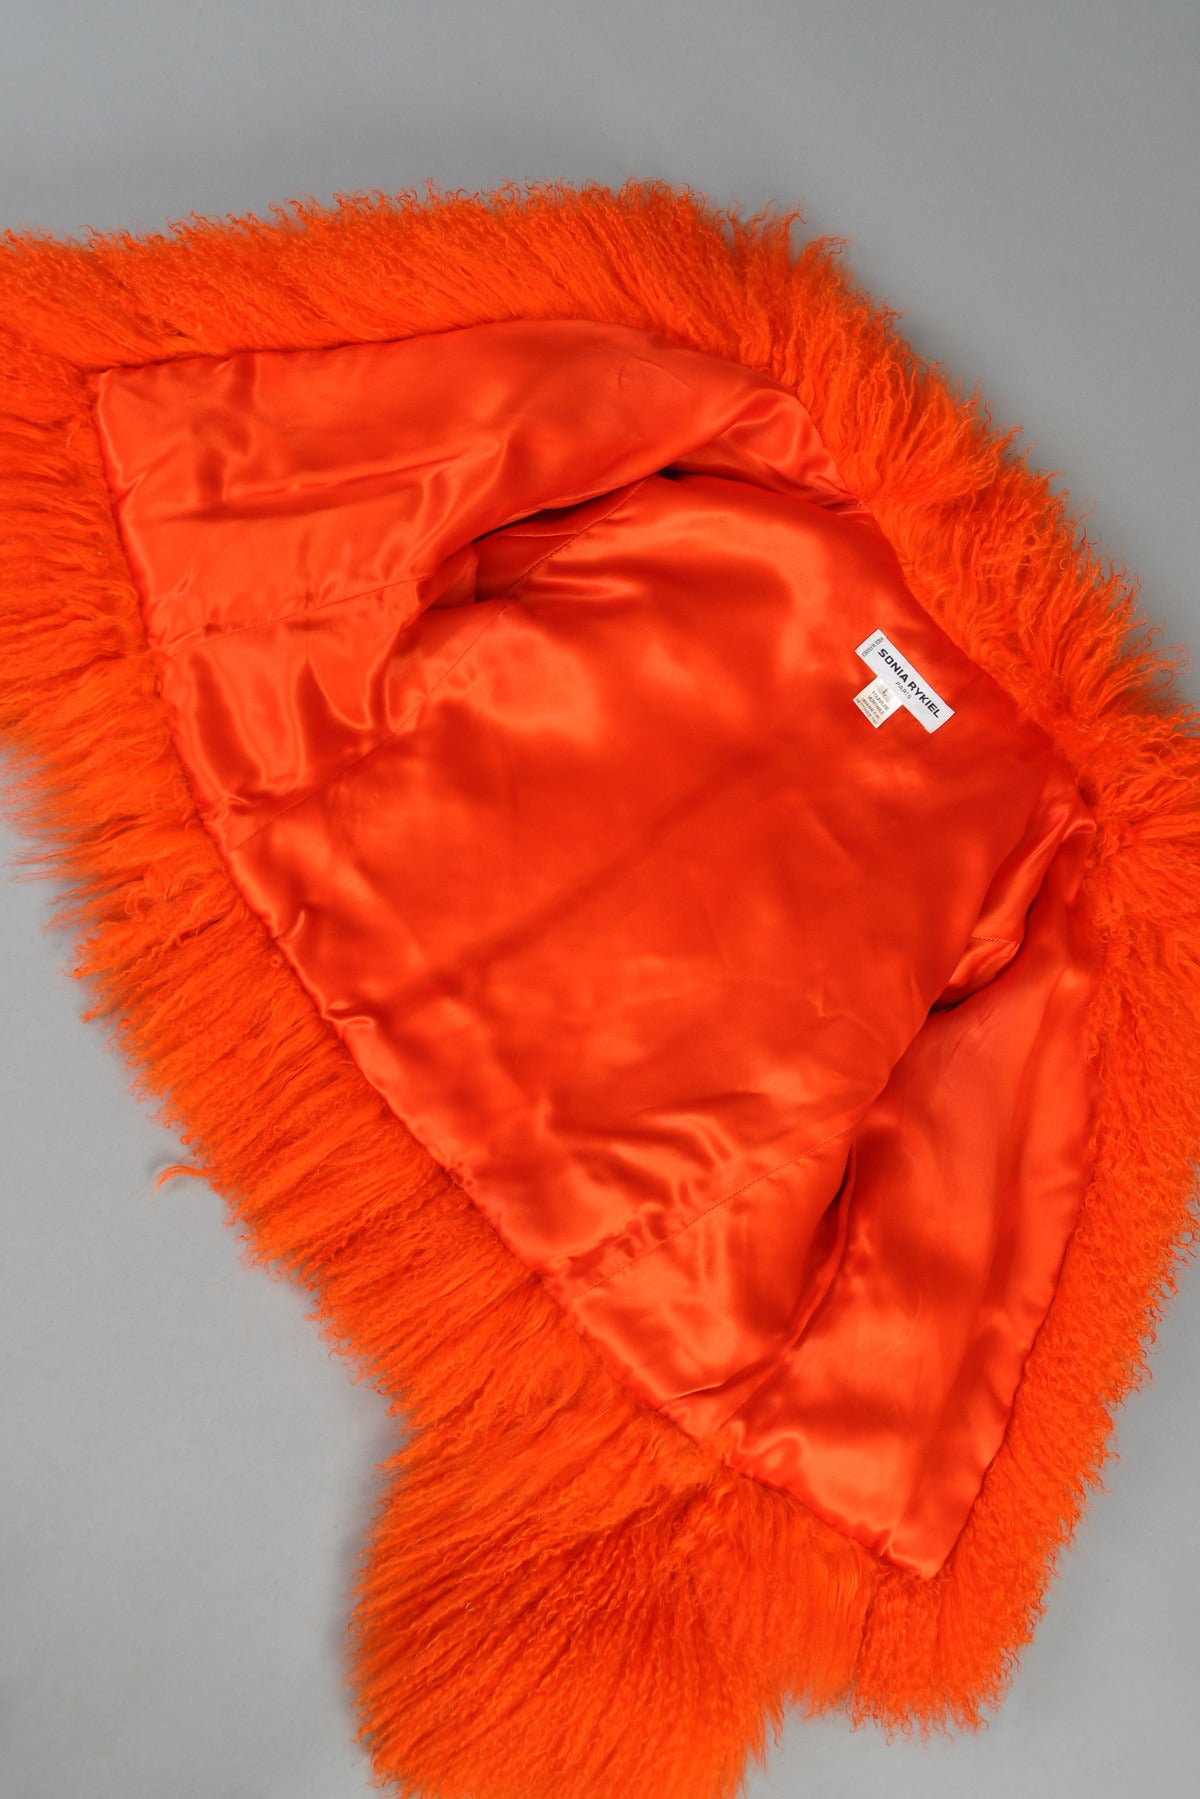 Sonia Rykiel Cropped Day-Glo Orange Mongolian Lamb Fur Coat 2